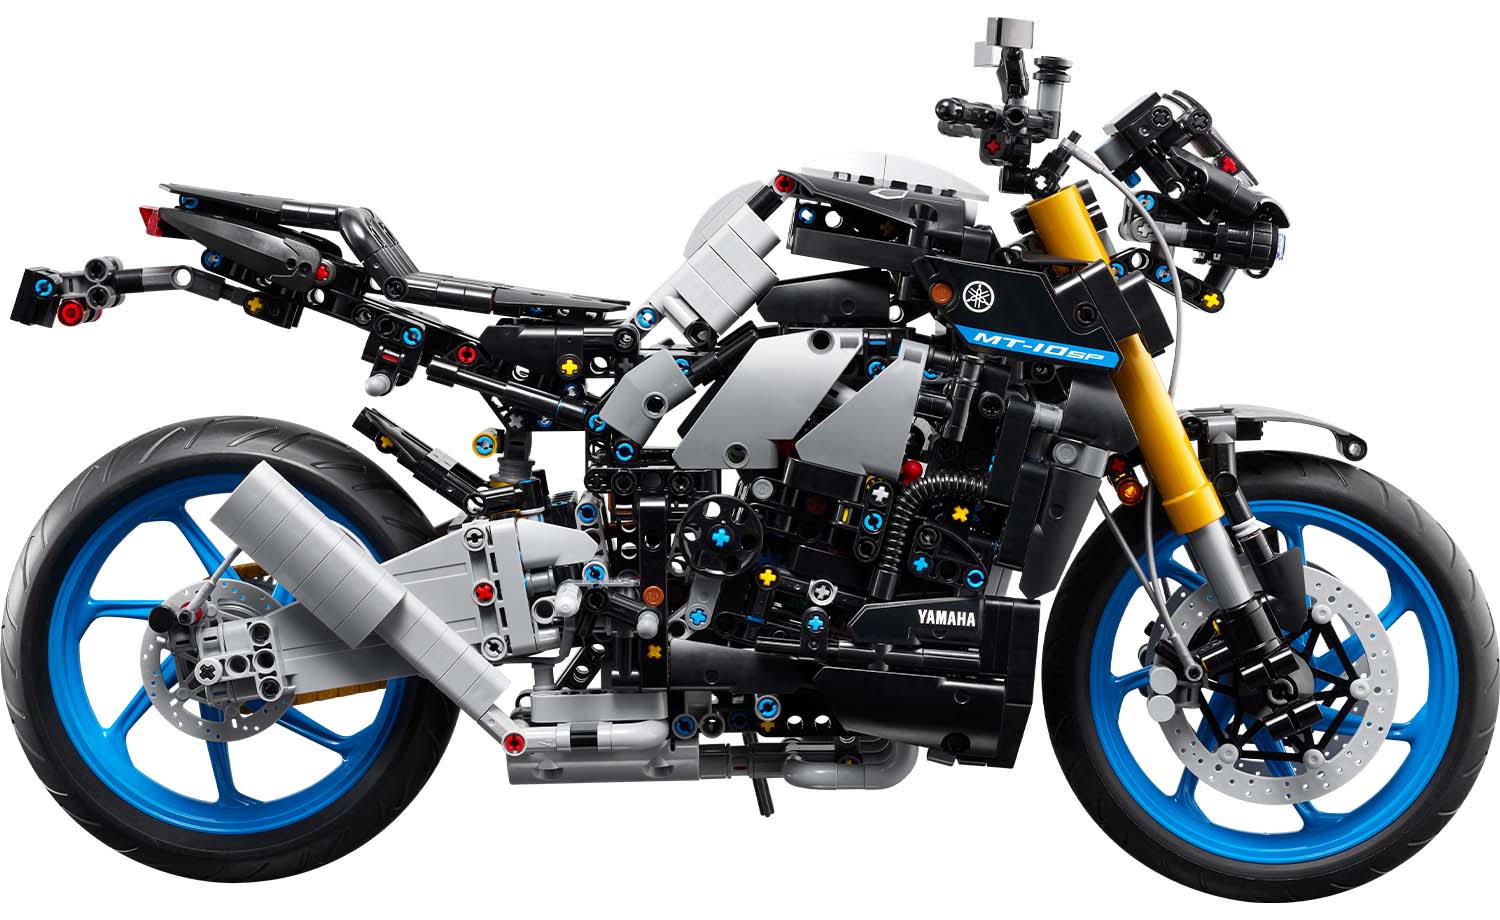 42159  LEGO® Technic Yamaha MT-10 SP – LEGO Certified Stores